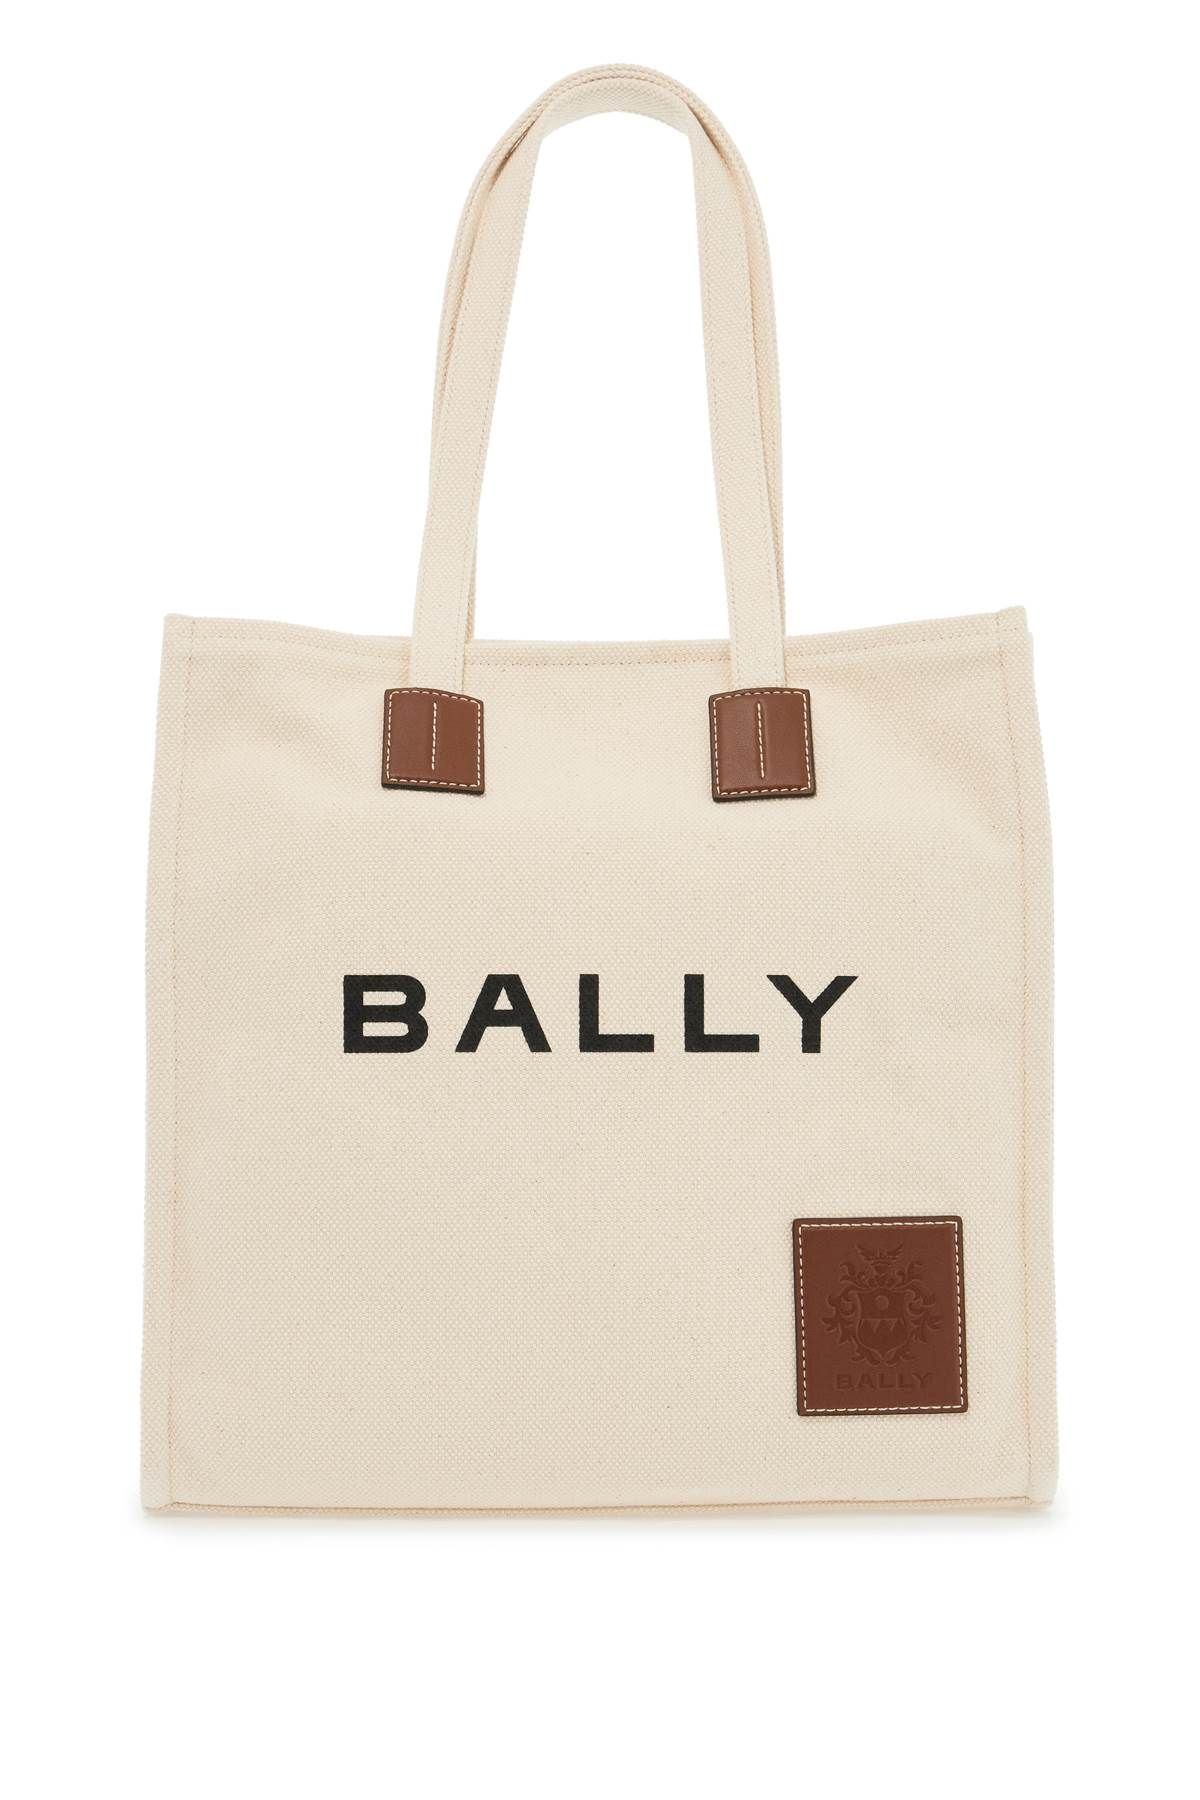 BALLY BALLY akelei canvas tote bag with